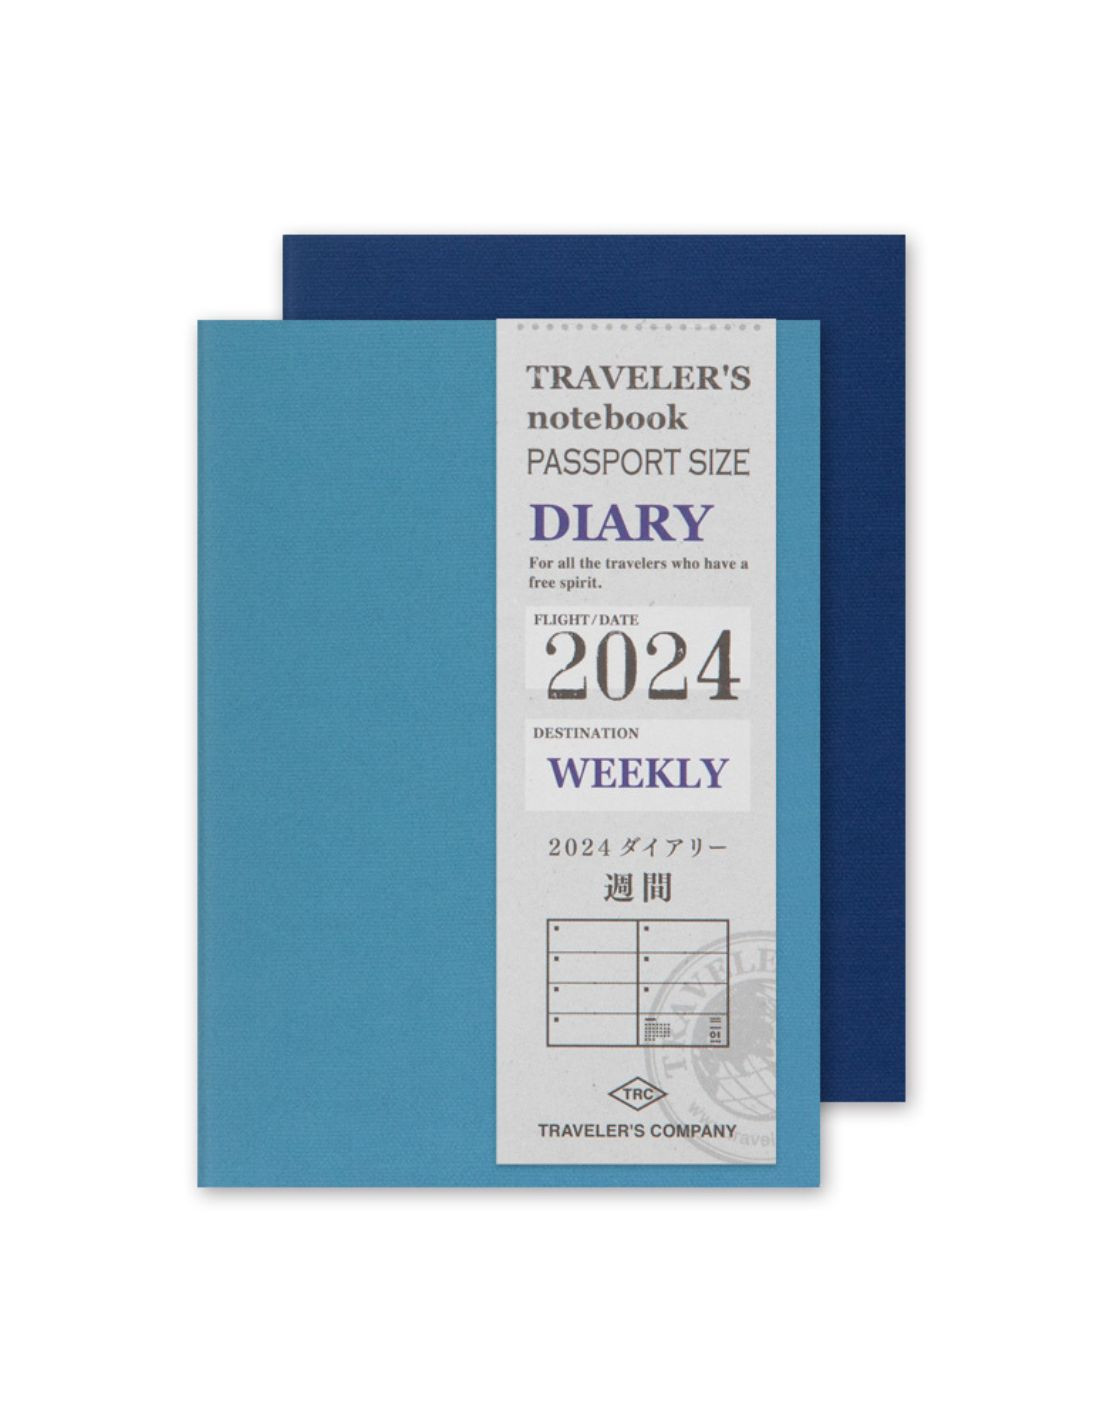 Agenda hebdo 2024 (Passport Size) - TRAVELER'S notebook